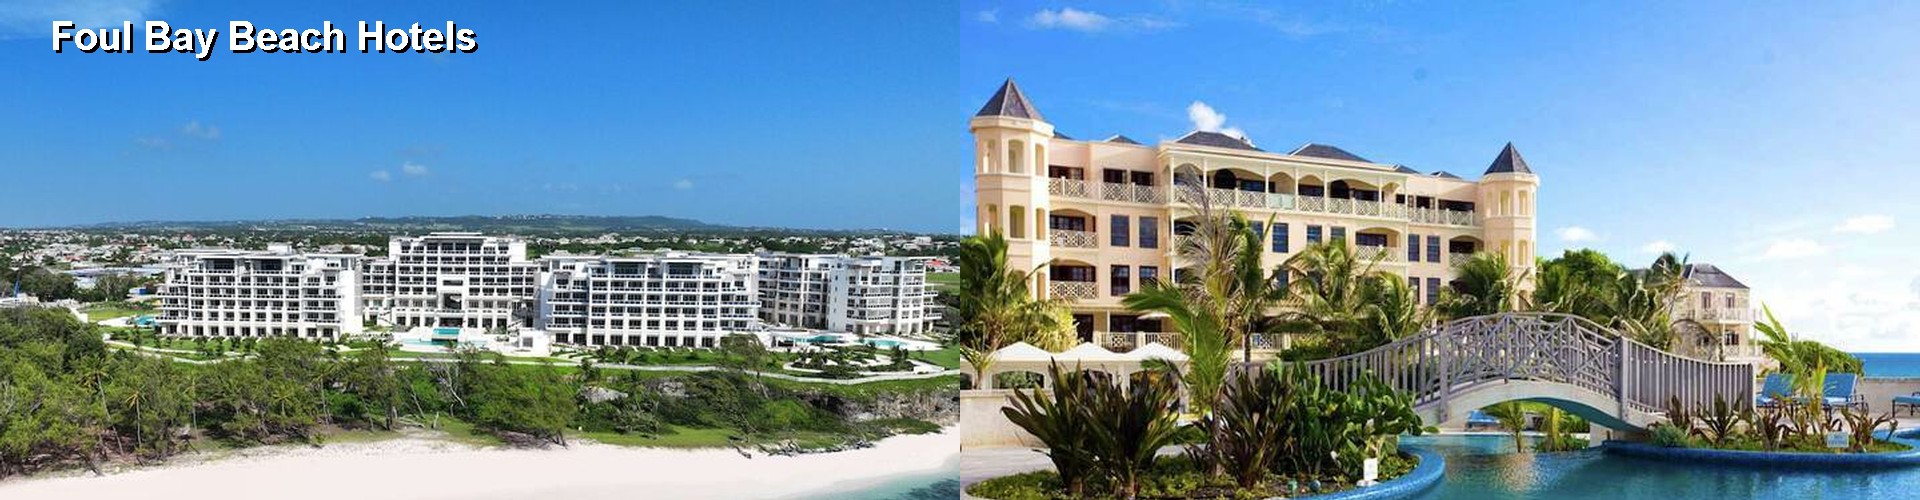 3 Best Hotels near Foul Bay Beach